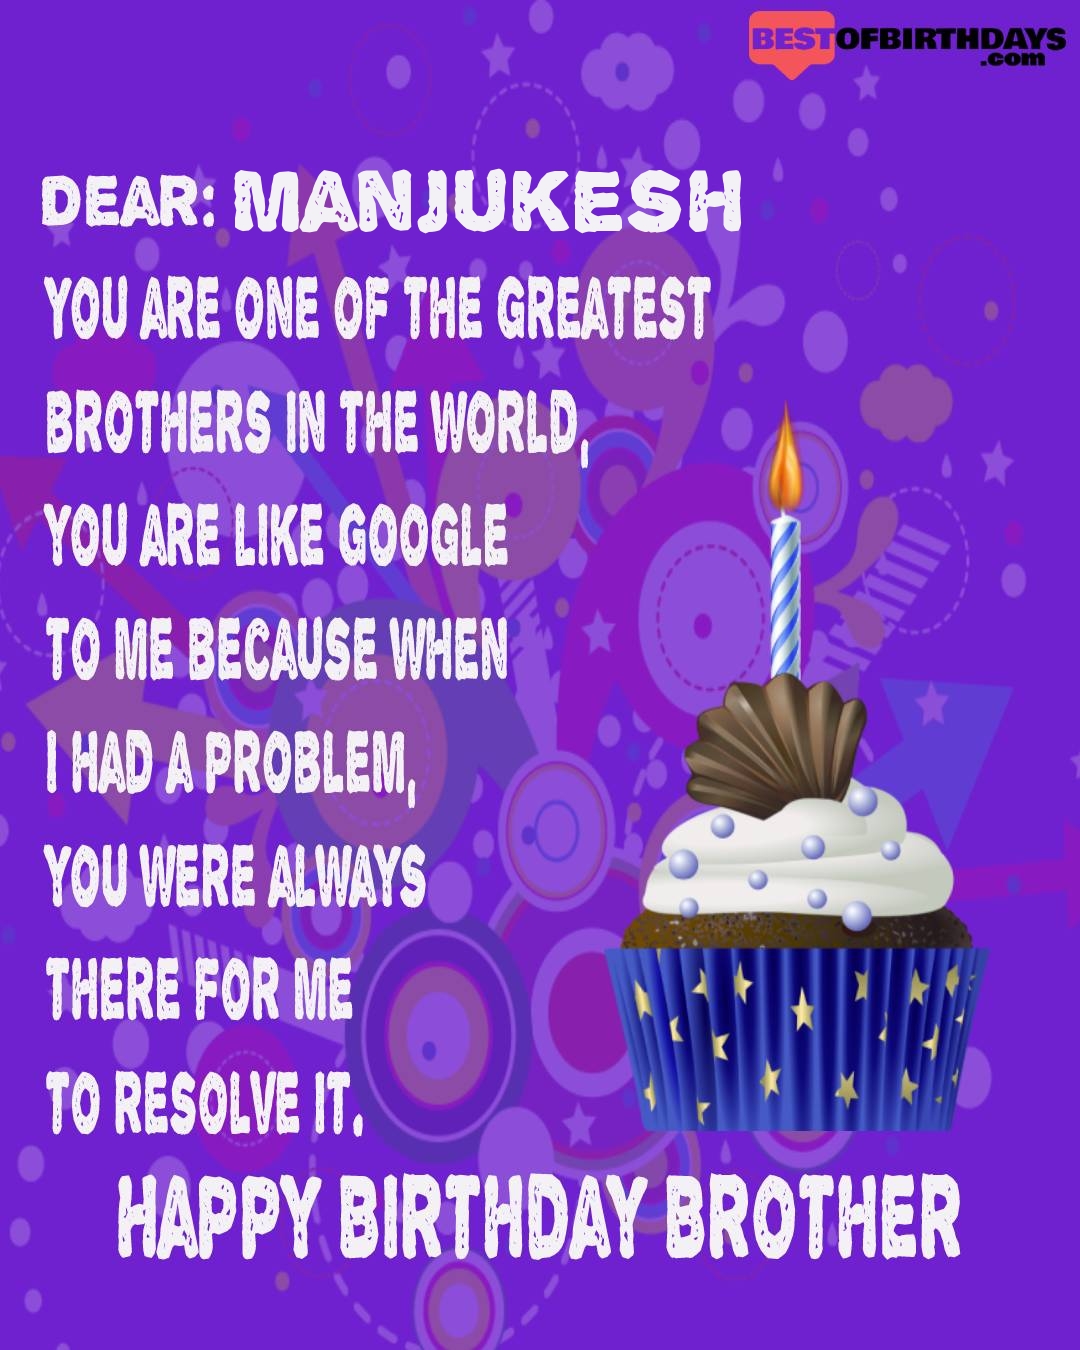 Happy birthday manjukesh bhai brother bro